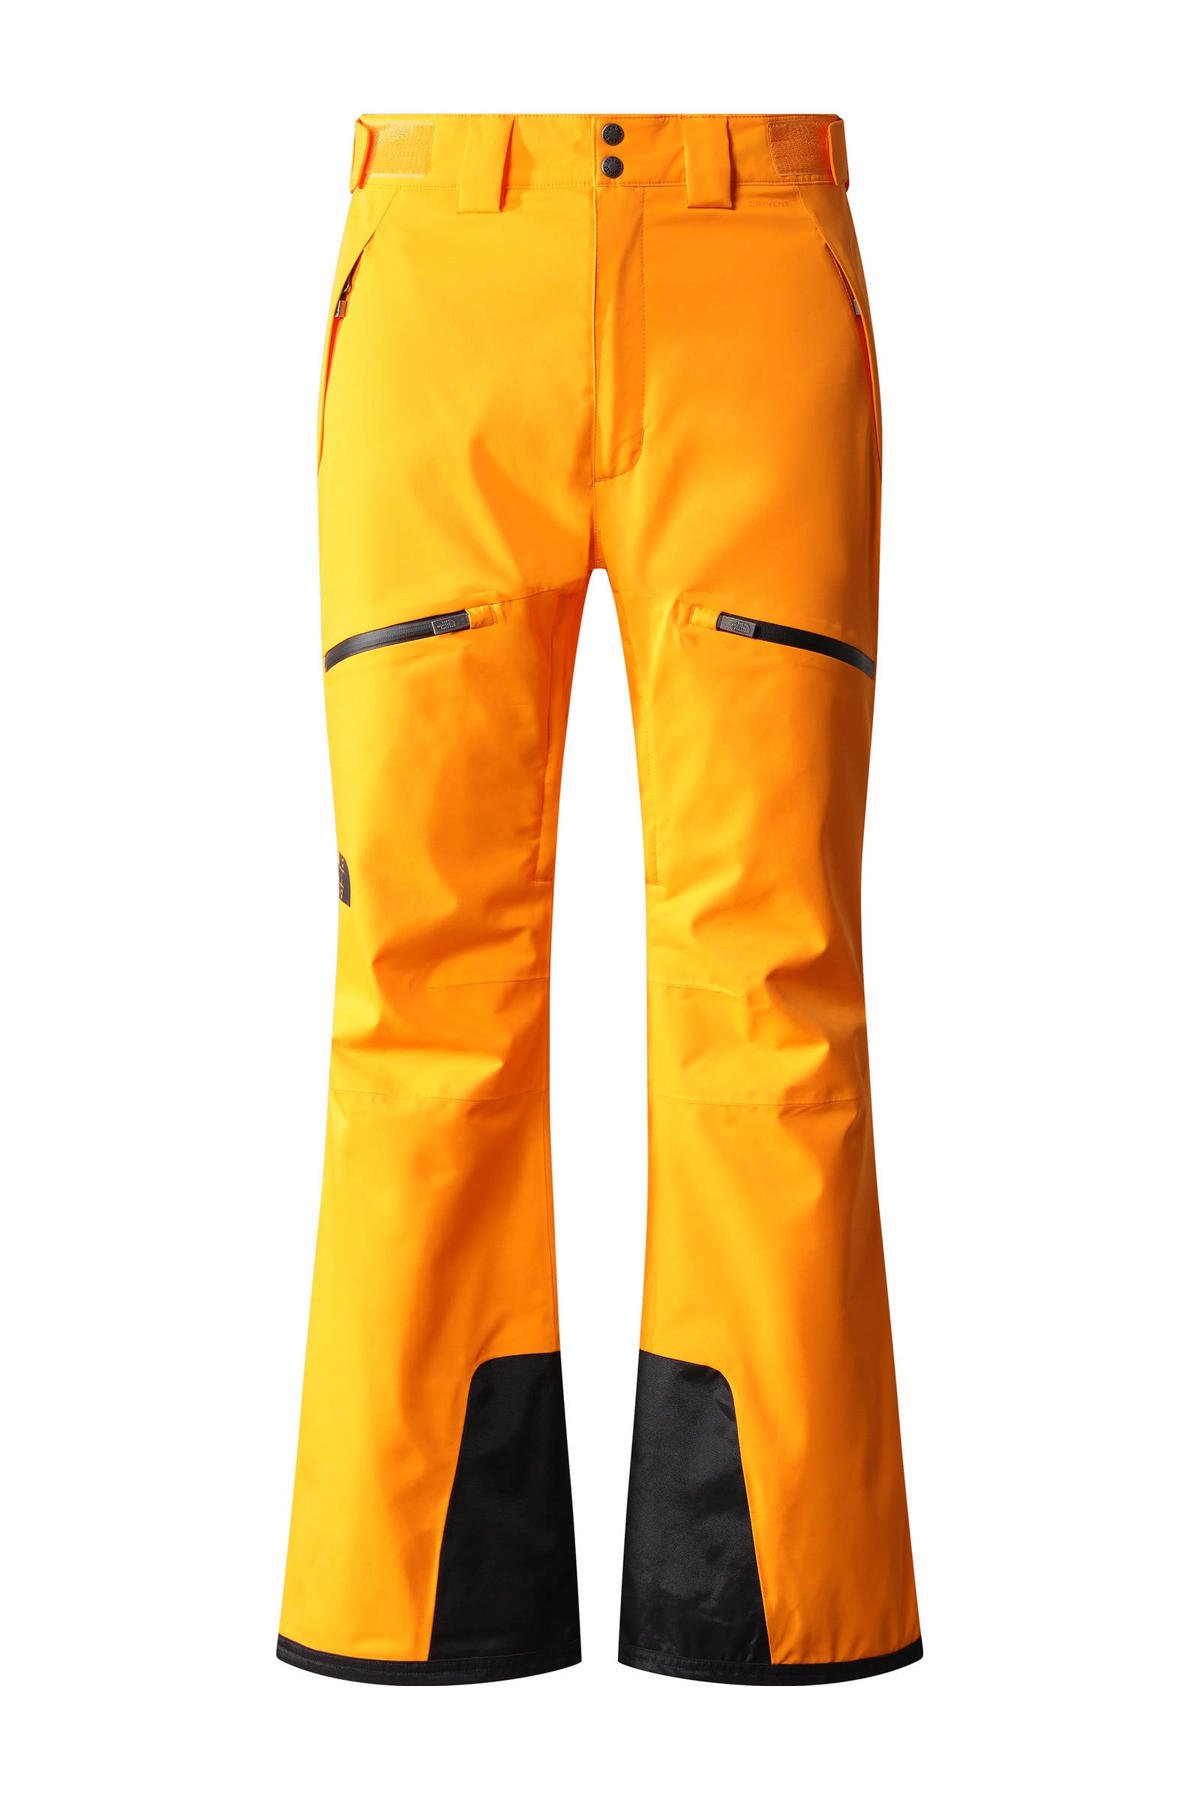 Veeg Ironisch Sitcom The North Face skibroek Chakal oranje | wehkamp